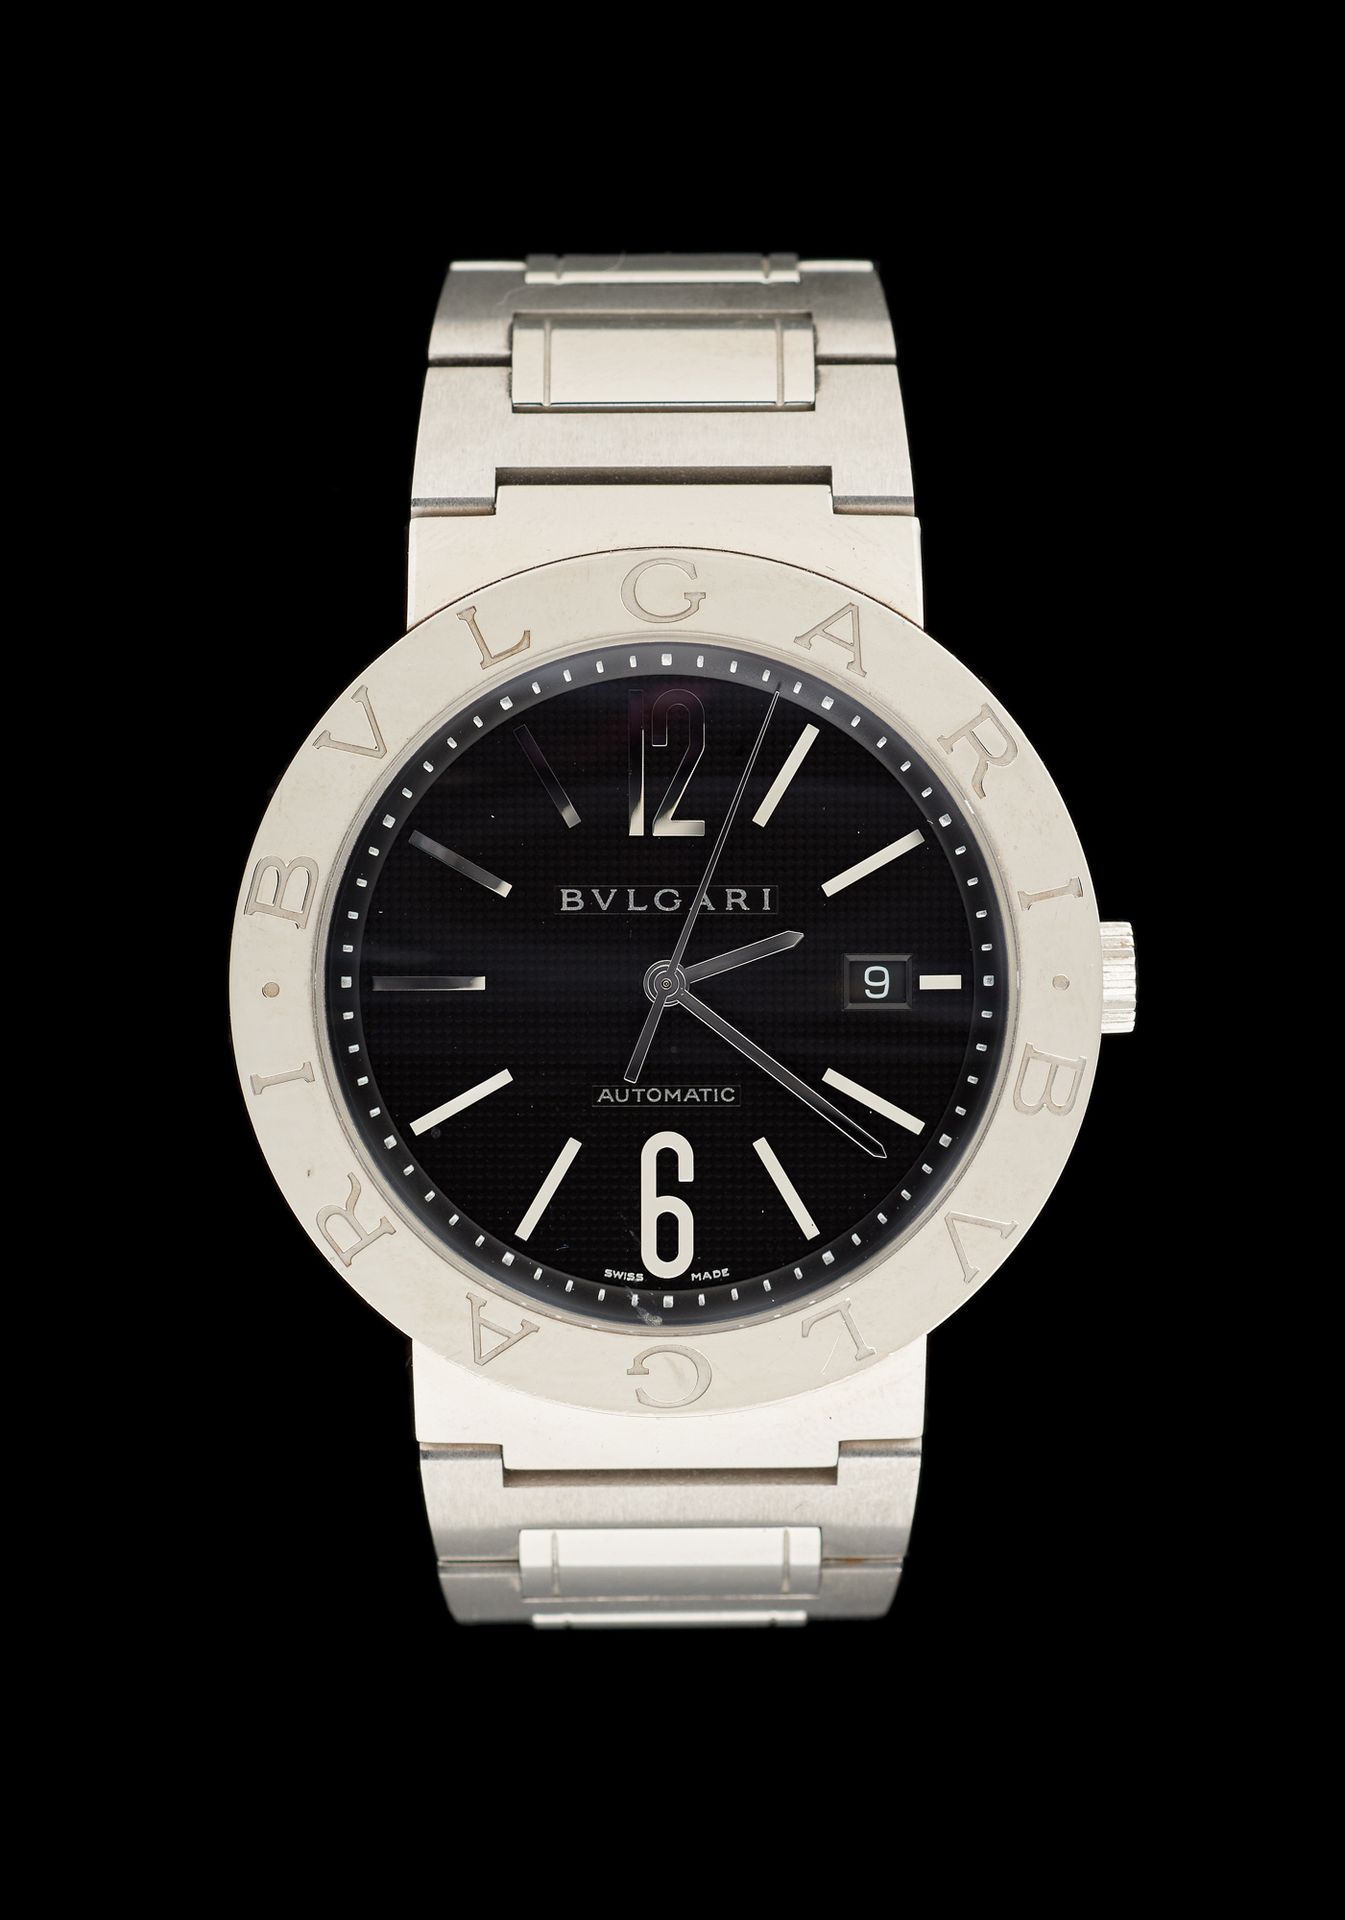 Bulgari. Watches: Steel wristwatch, automatic movement with date window.

Bulgar&hellip;